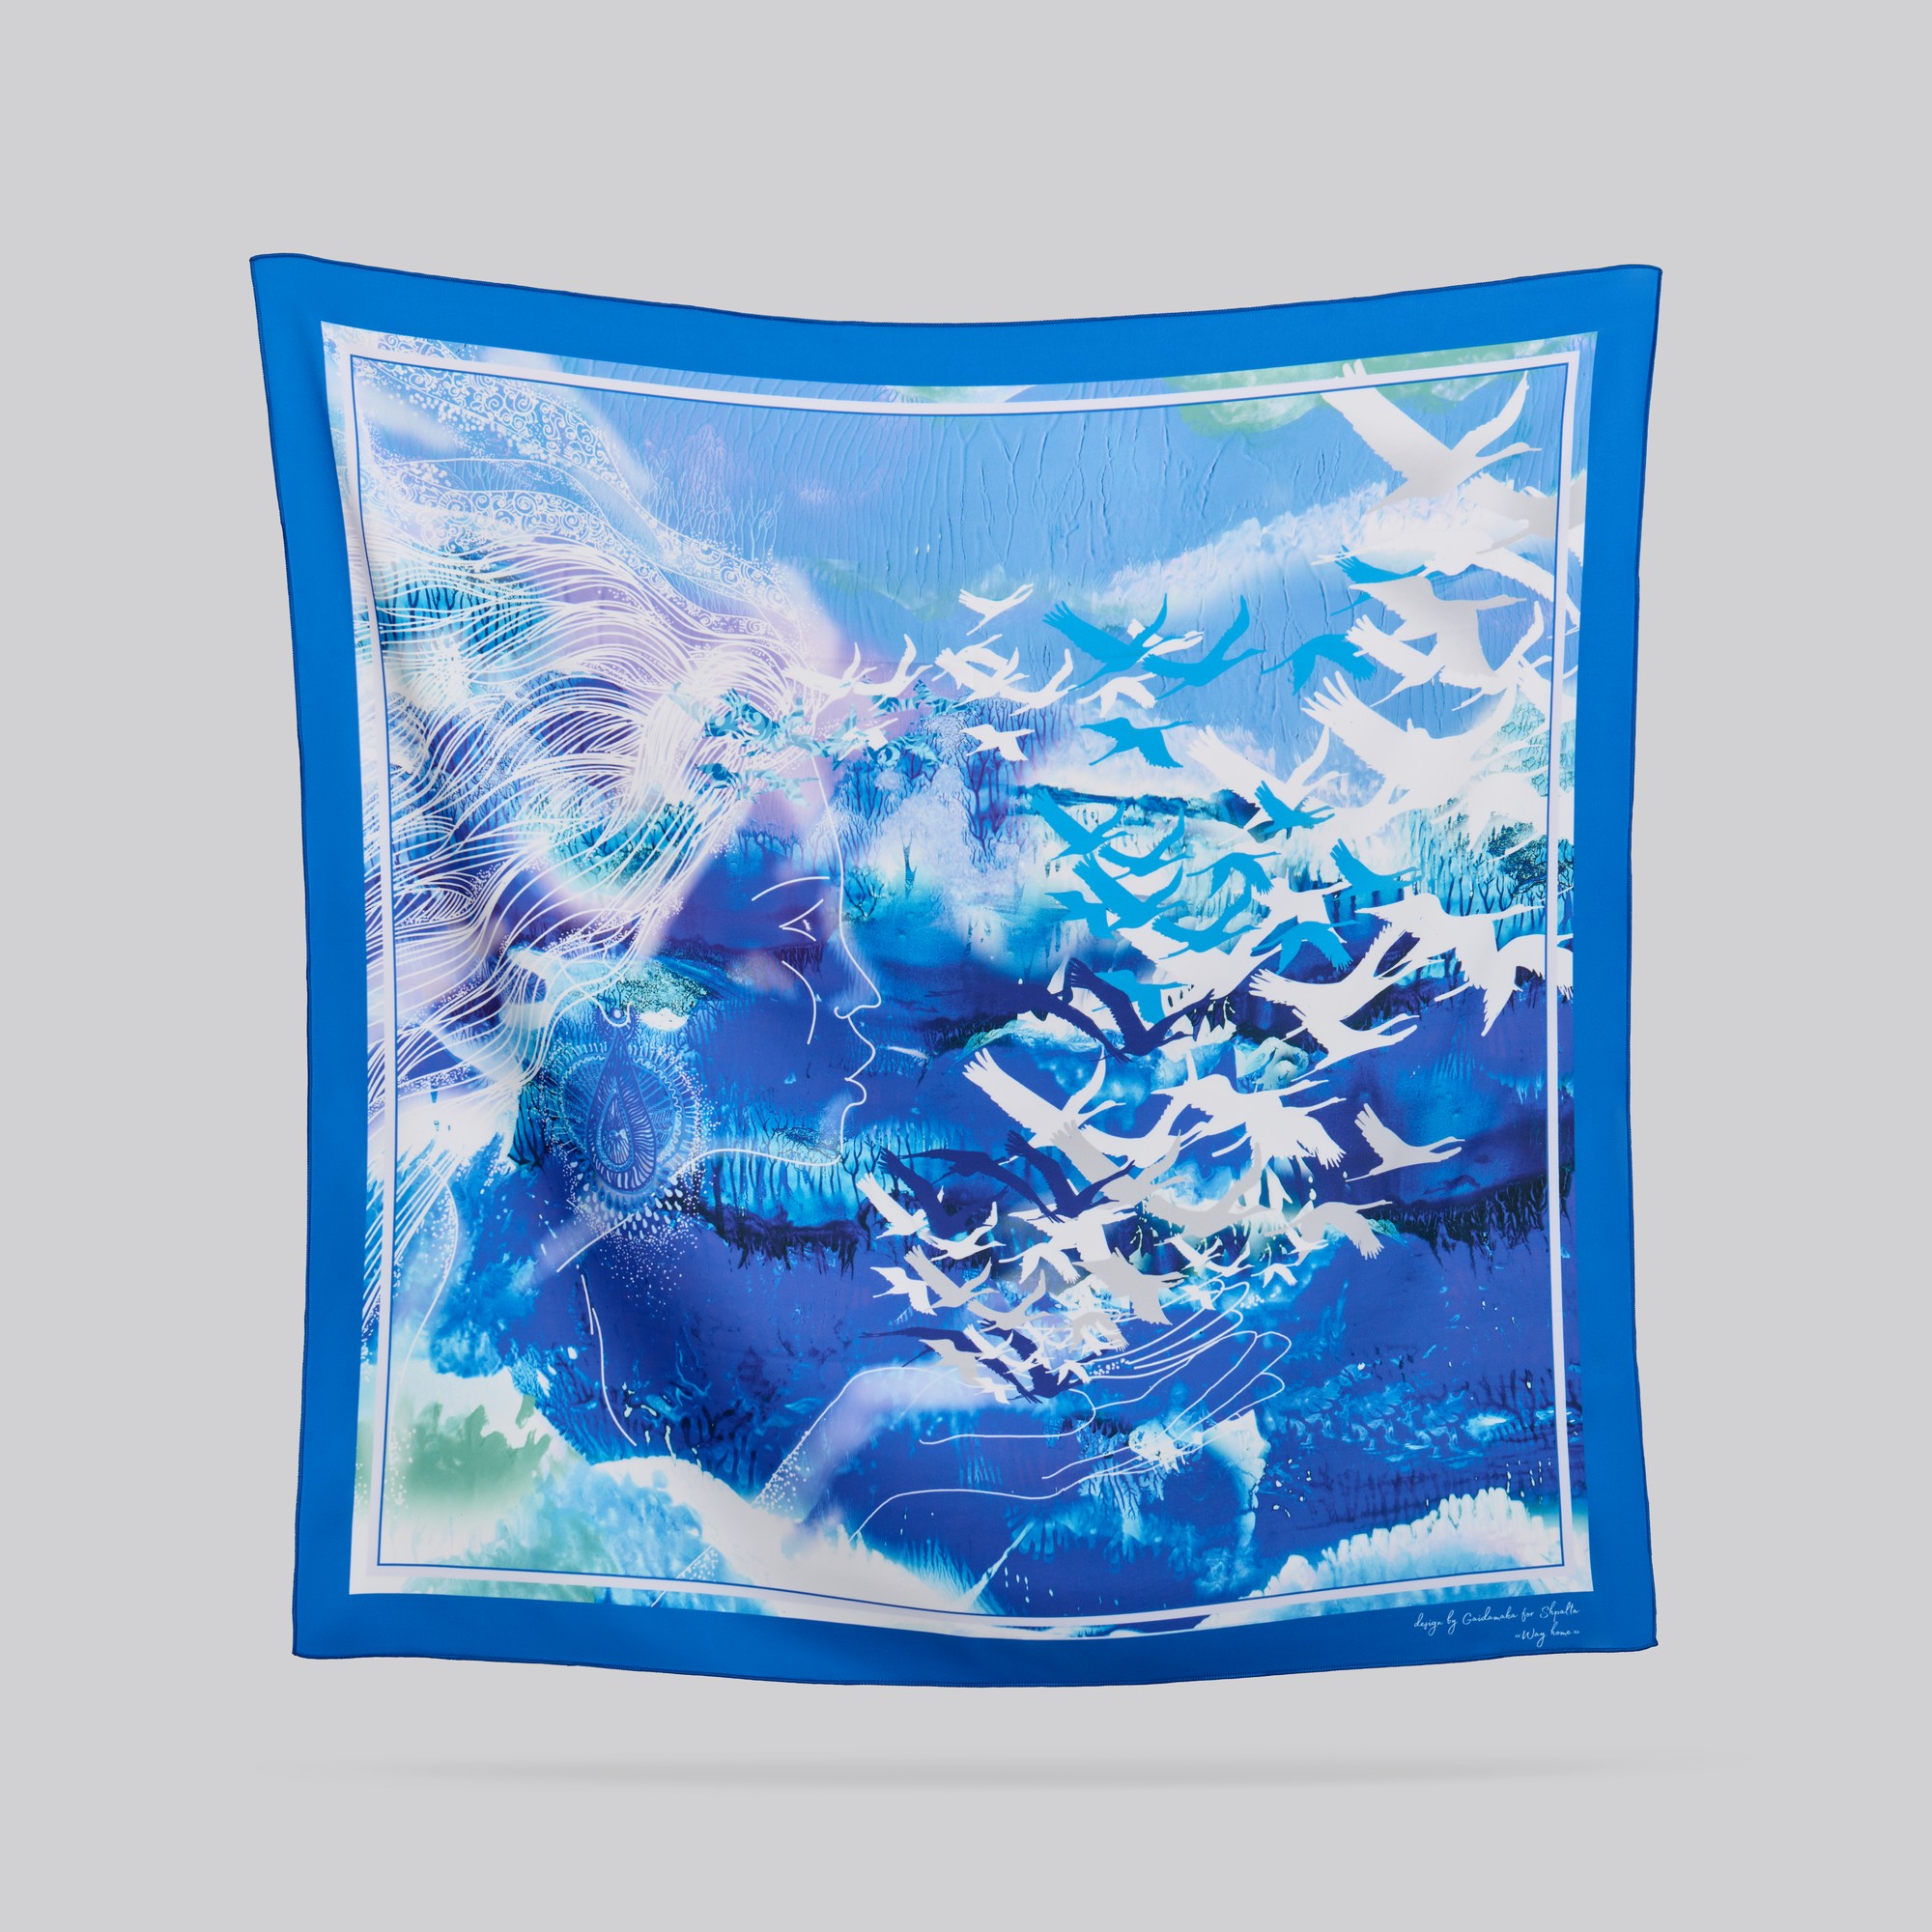 Scarf "Breath of Heaven" Size 85*85 cm silk shawl from Ukraine